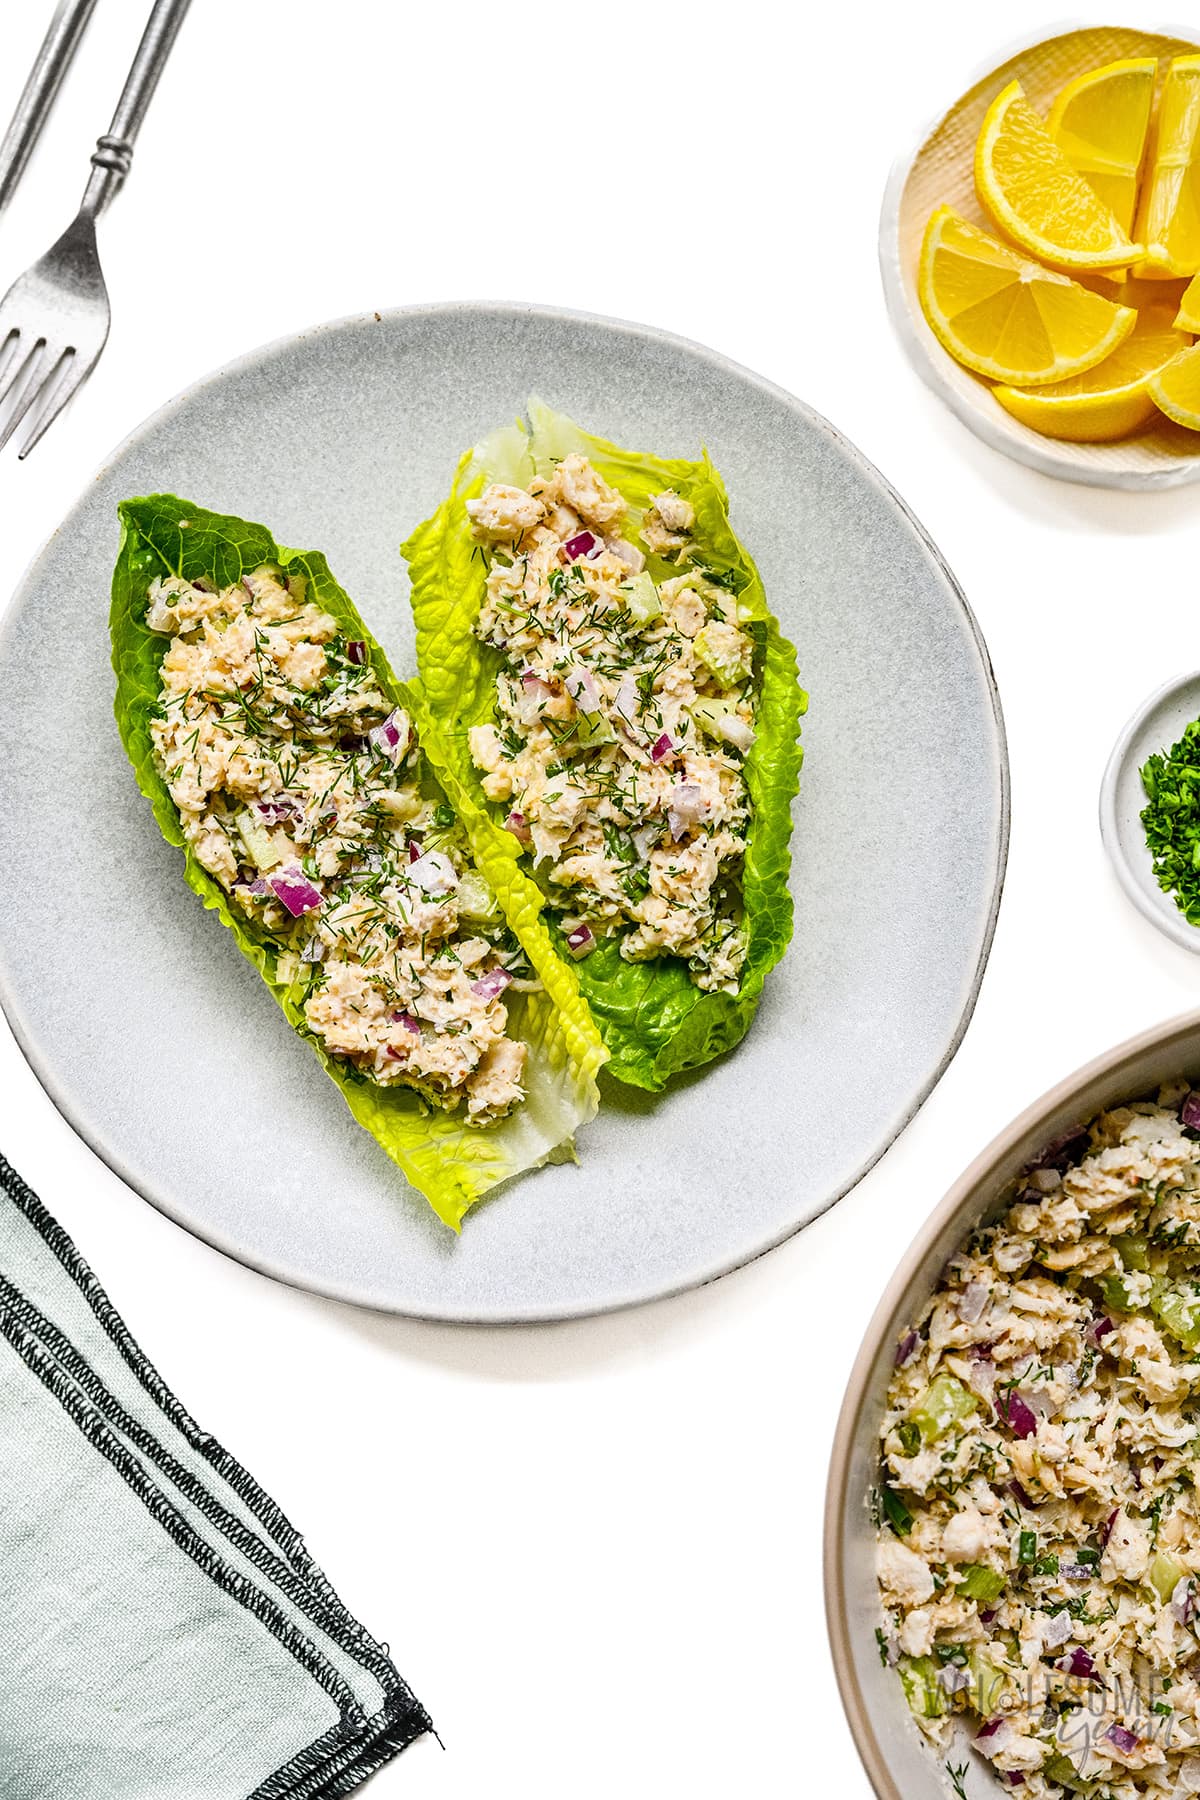 Crab salad spread onto lettuce leaves.